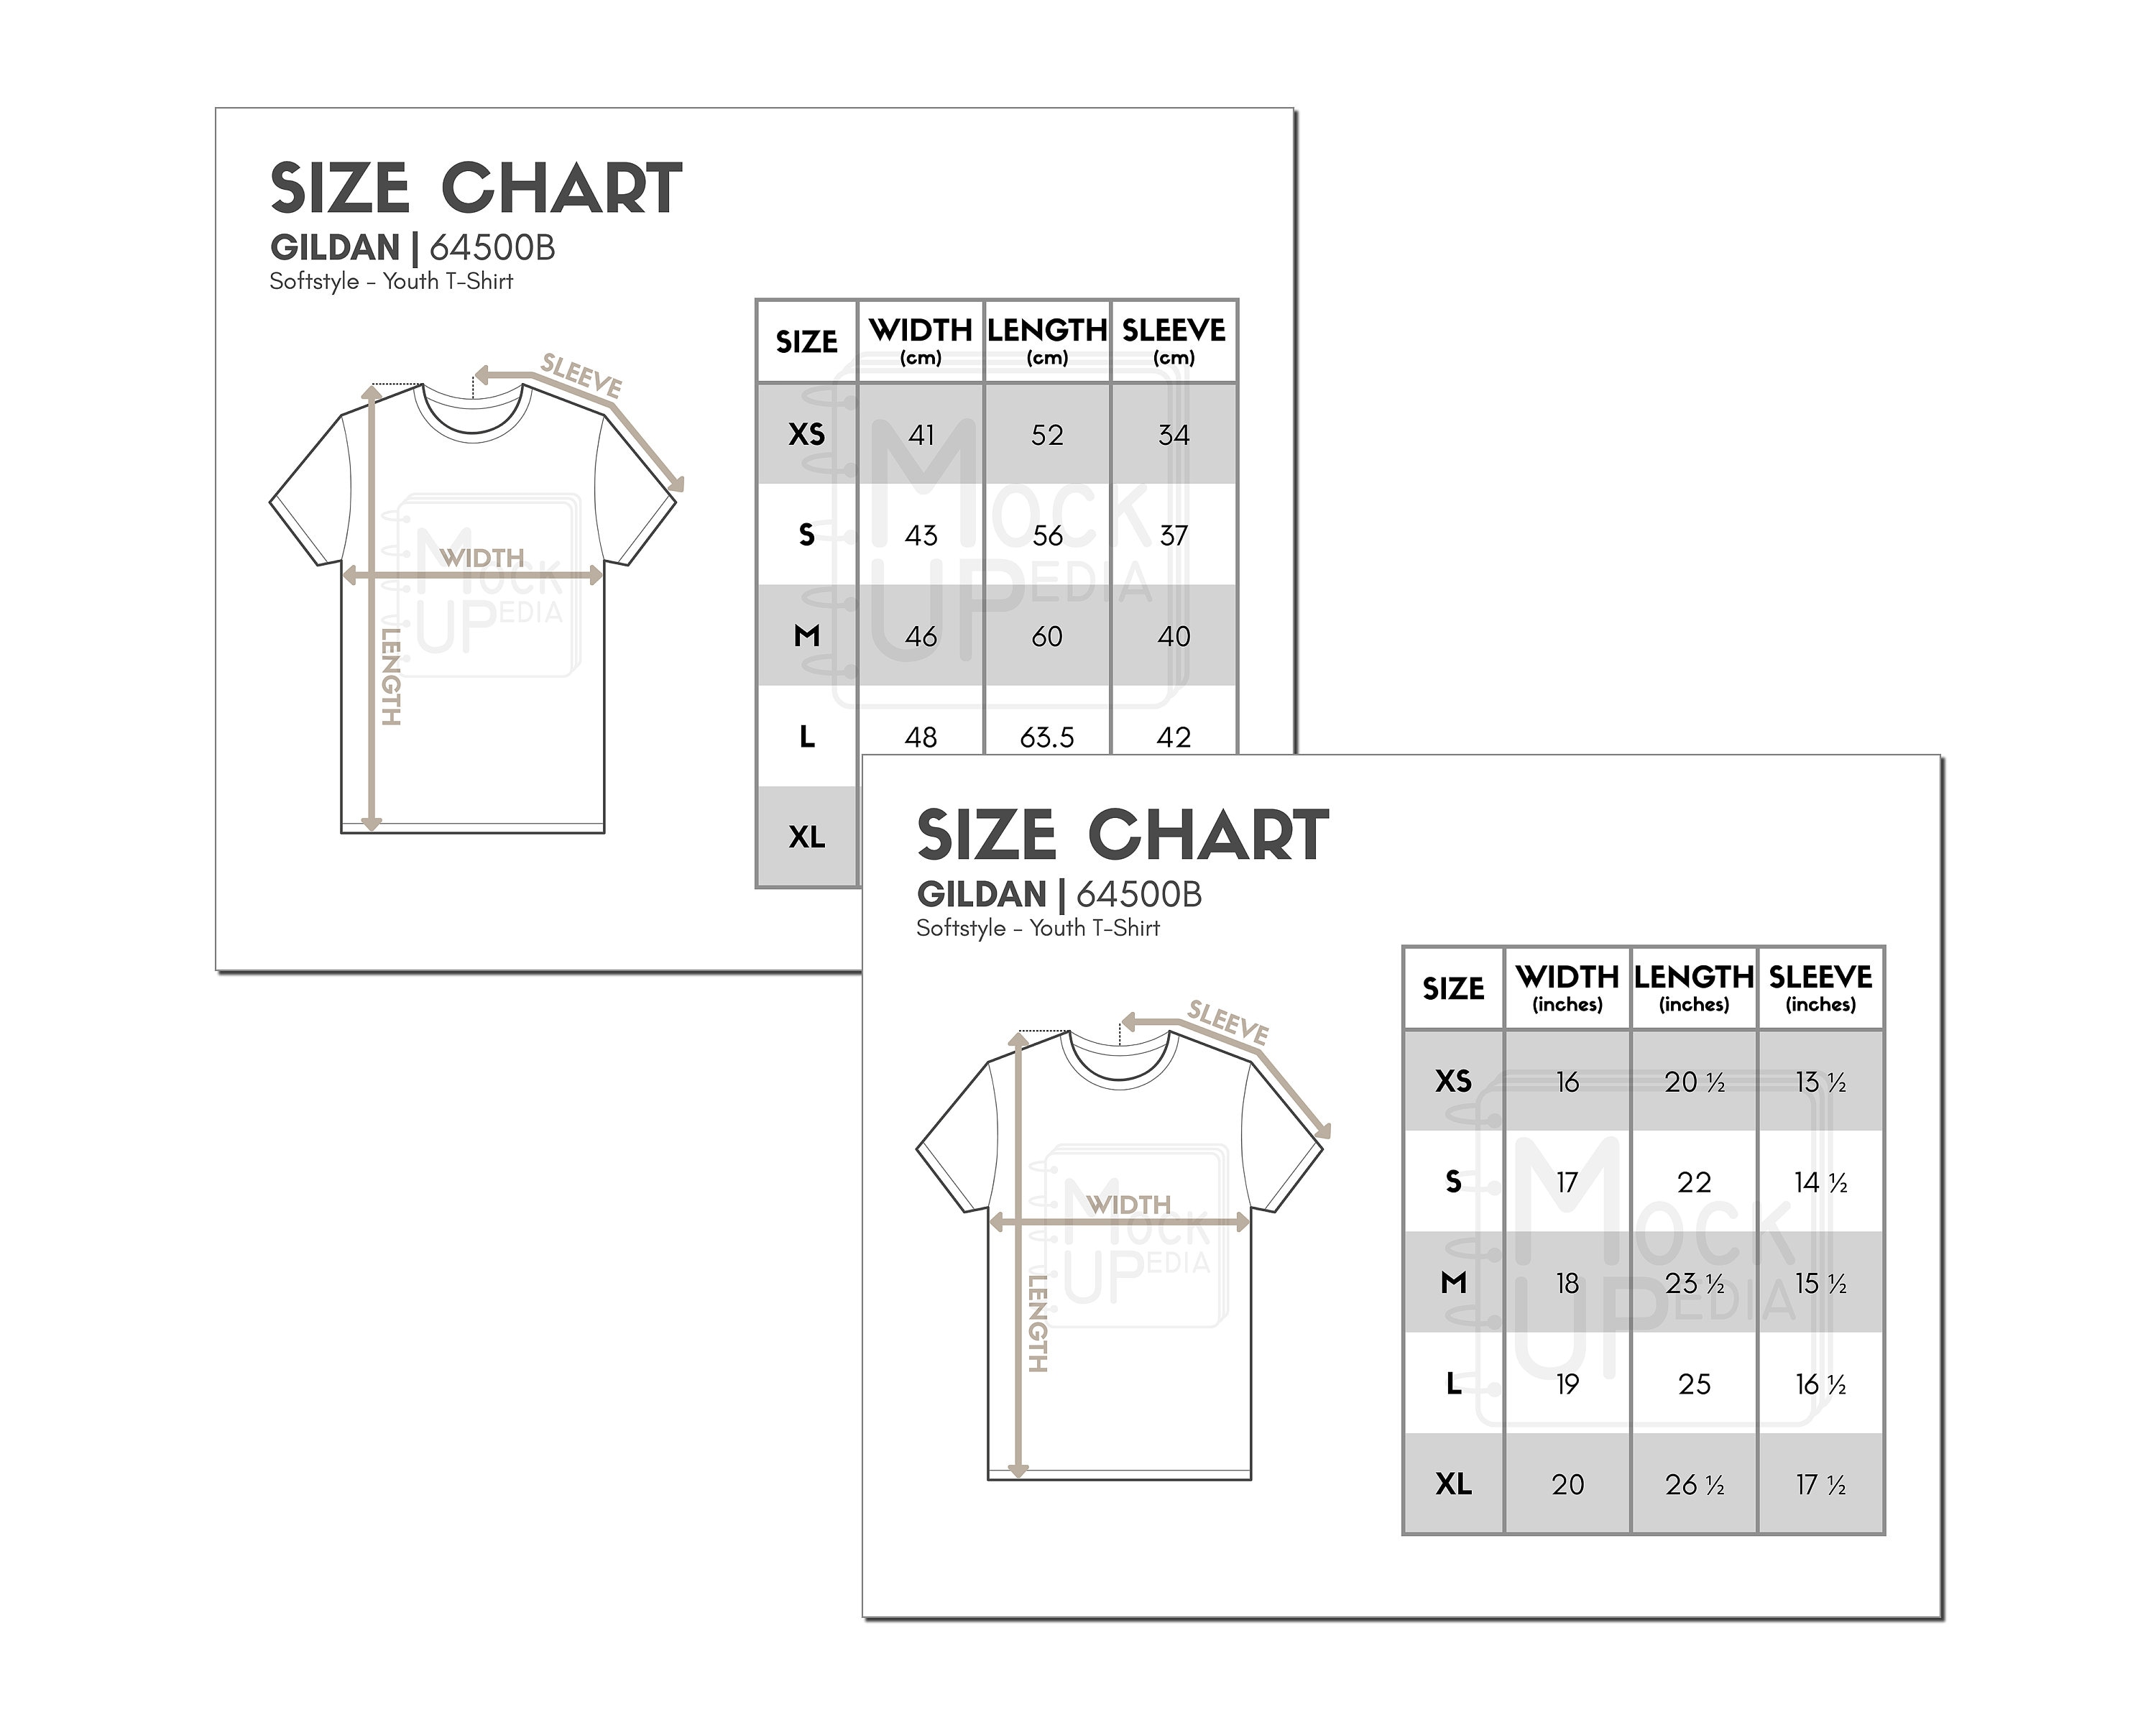 gildan-64500b-youth-t-shirt-size-chart-inches-cm-digital-etsy